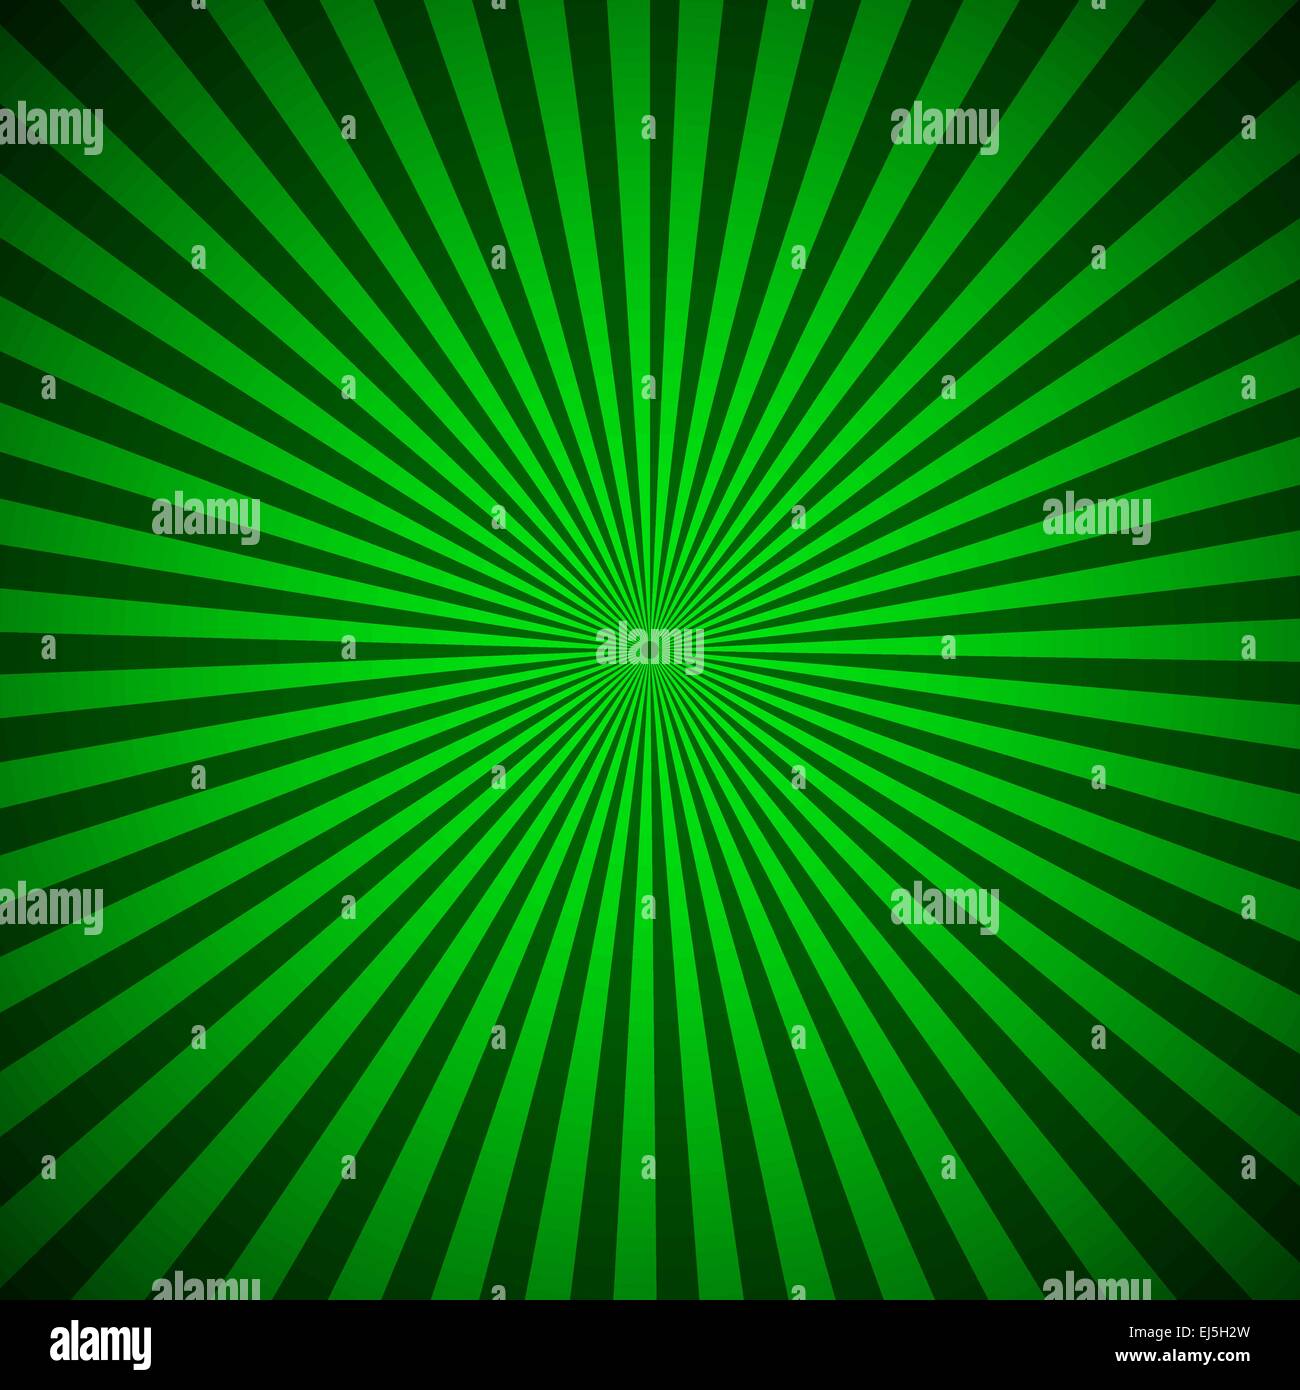 Grün radialen Strahlen abstrakten Hintergrund, Vektor-illustration Stock Vektor